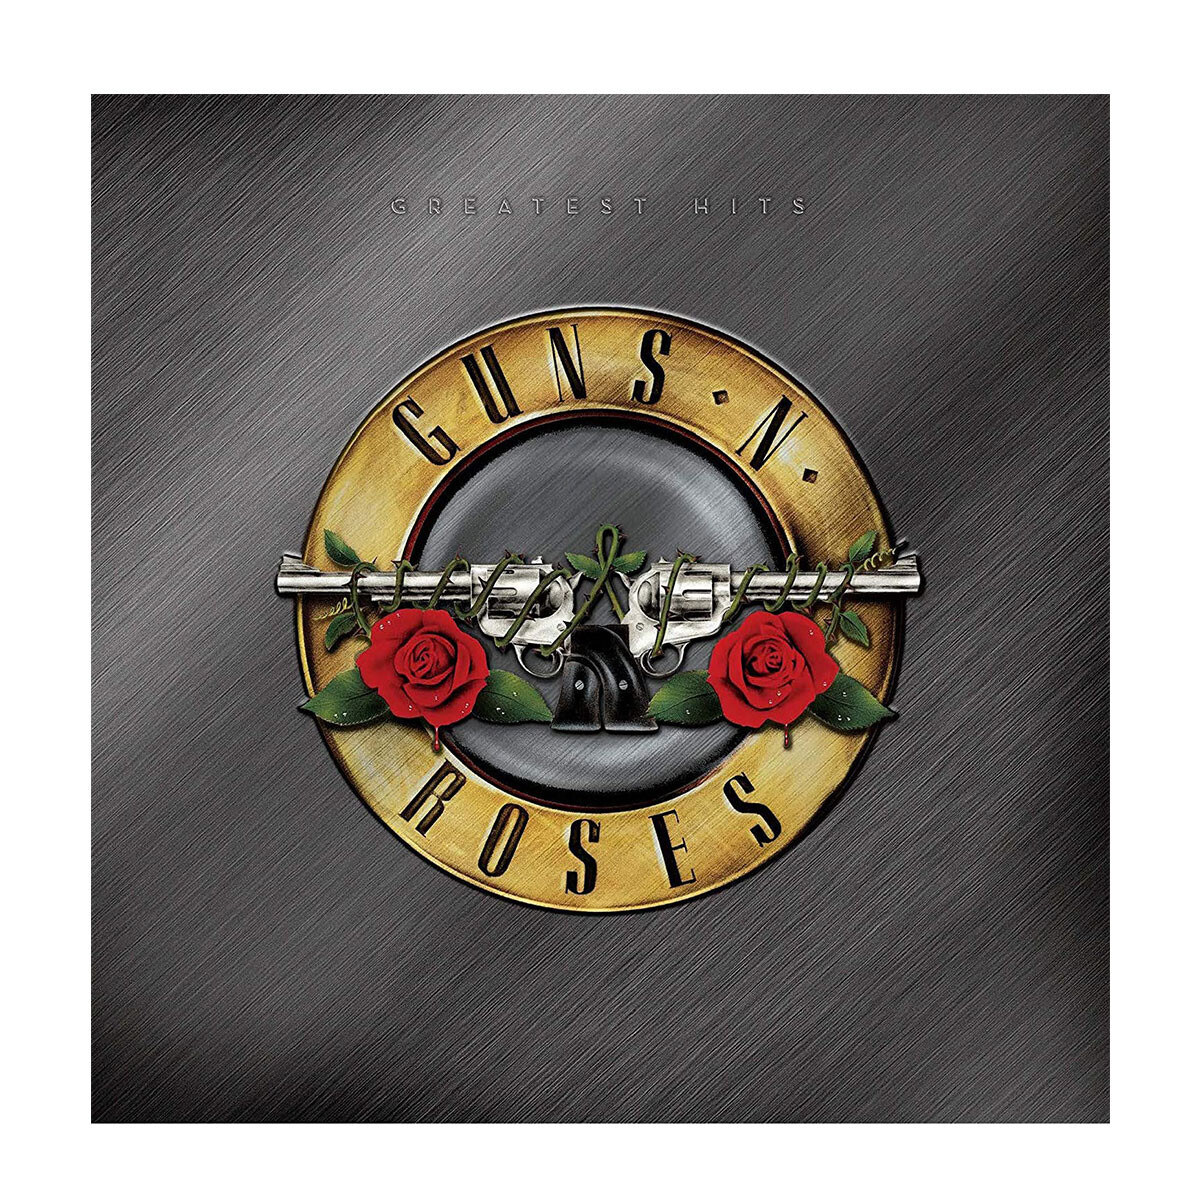 Guns N Roses - Greatest Hits 